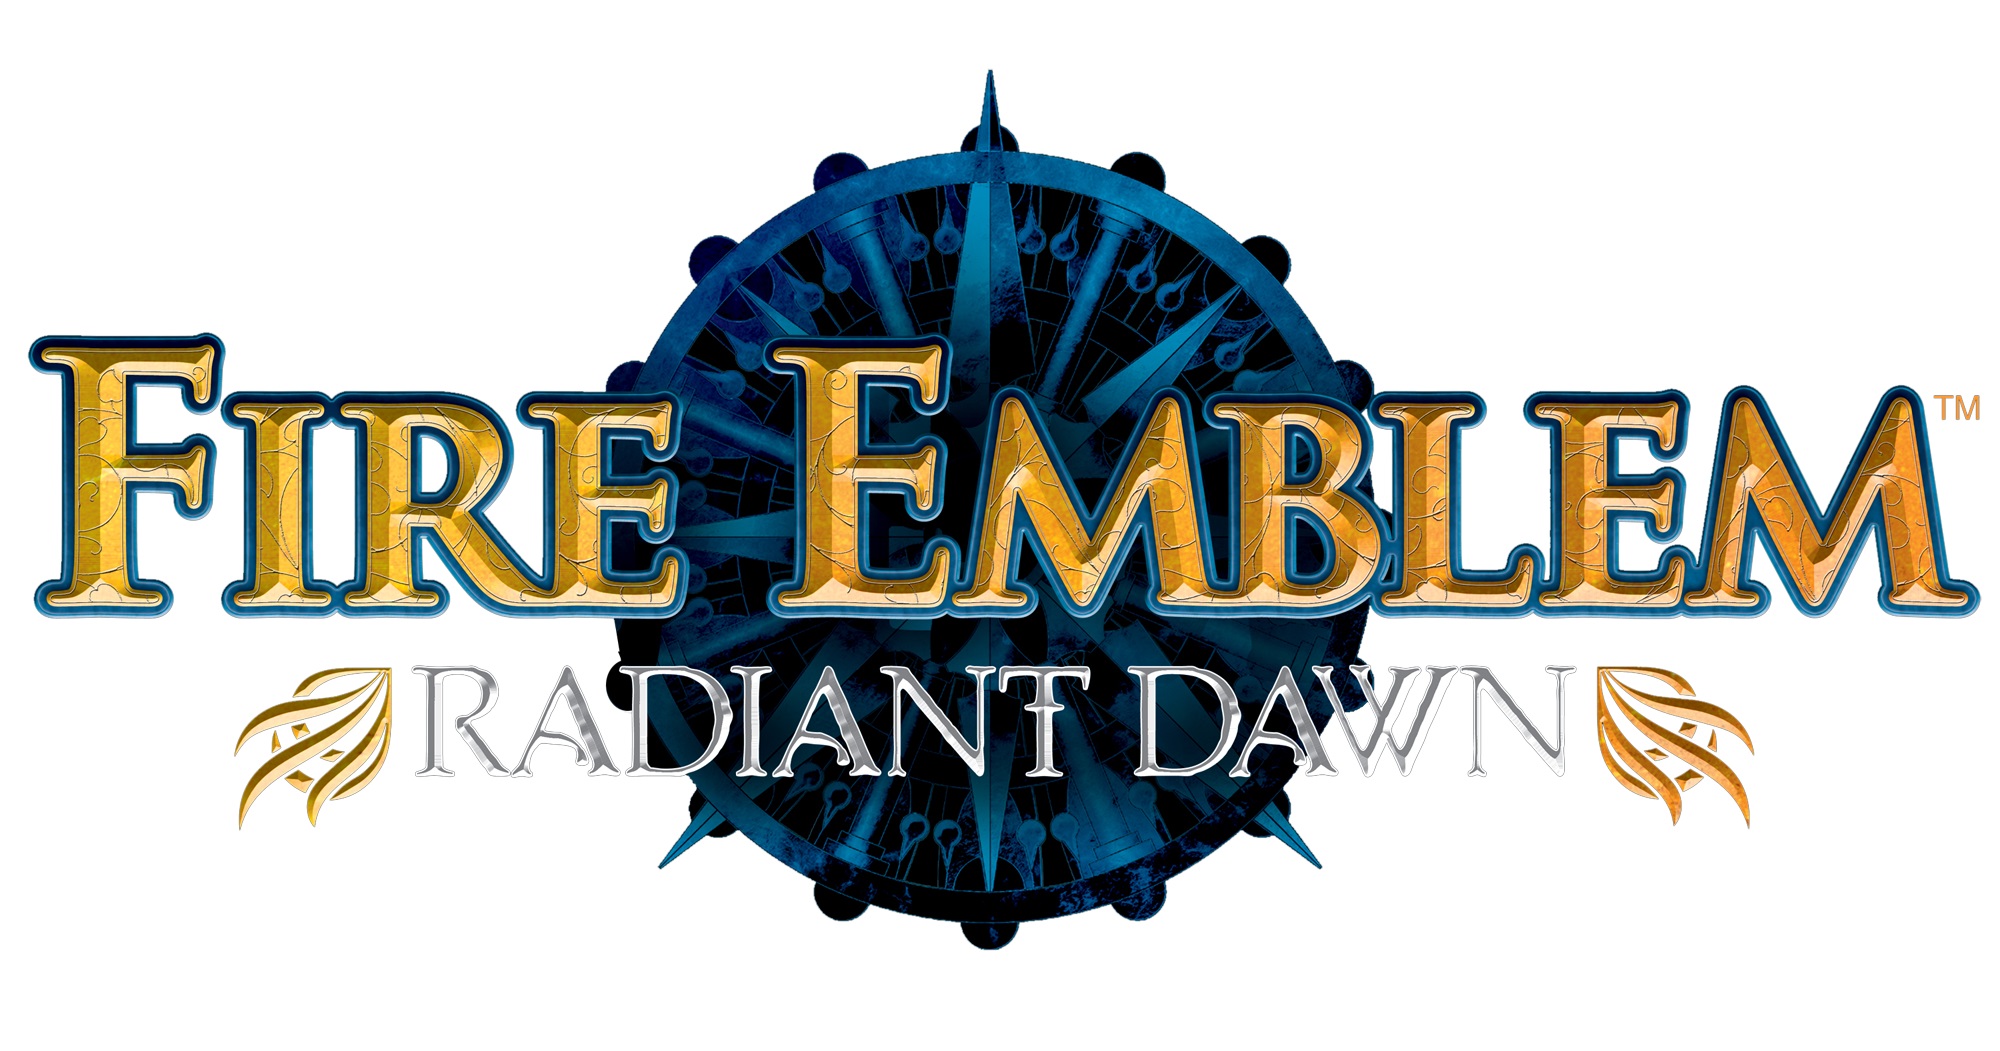 fire emblem wiki radiant dawn